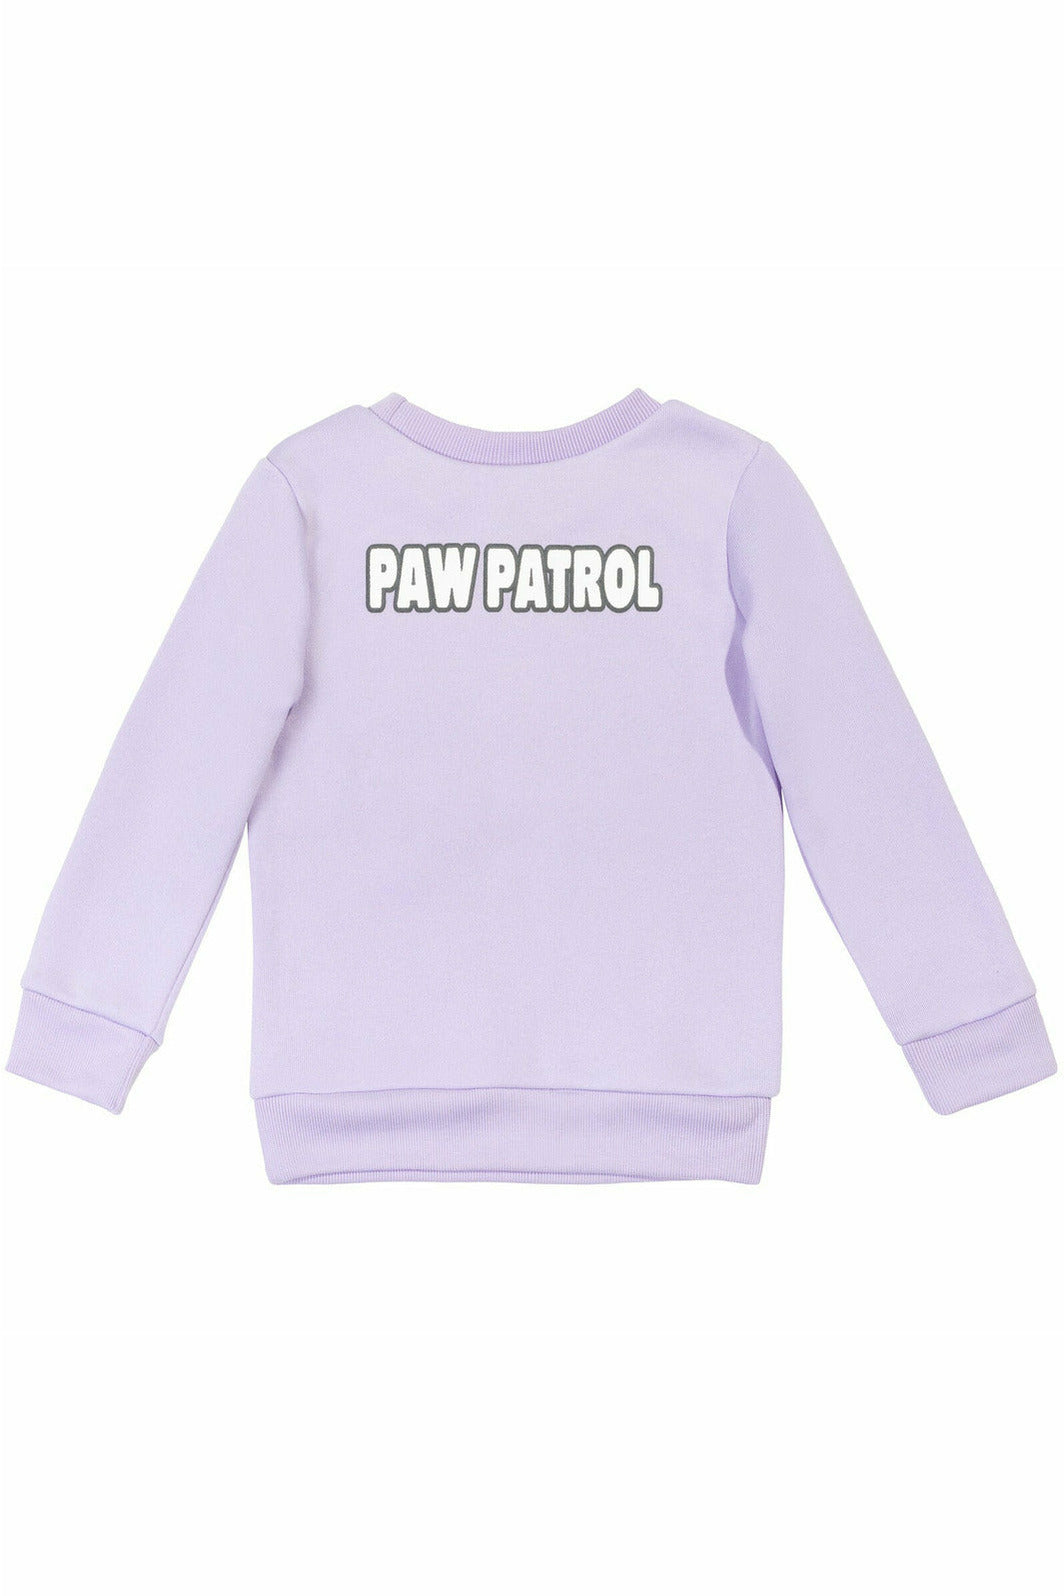 Paw Patrol Skye Toddler Girls Pullover Crossover Fleece Hoodie and